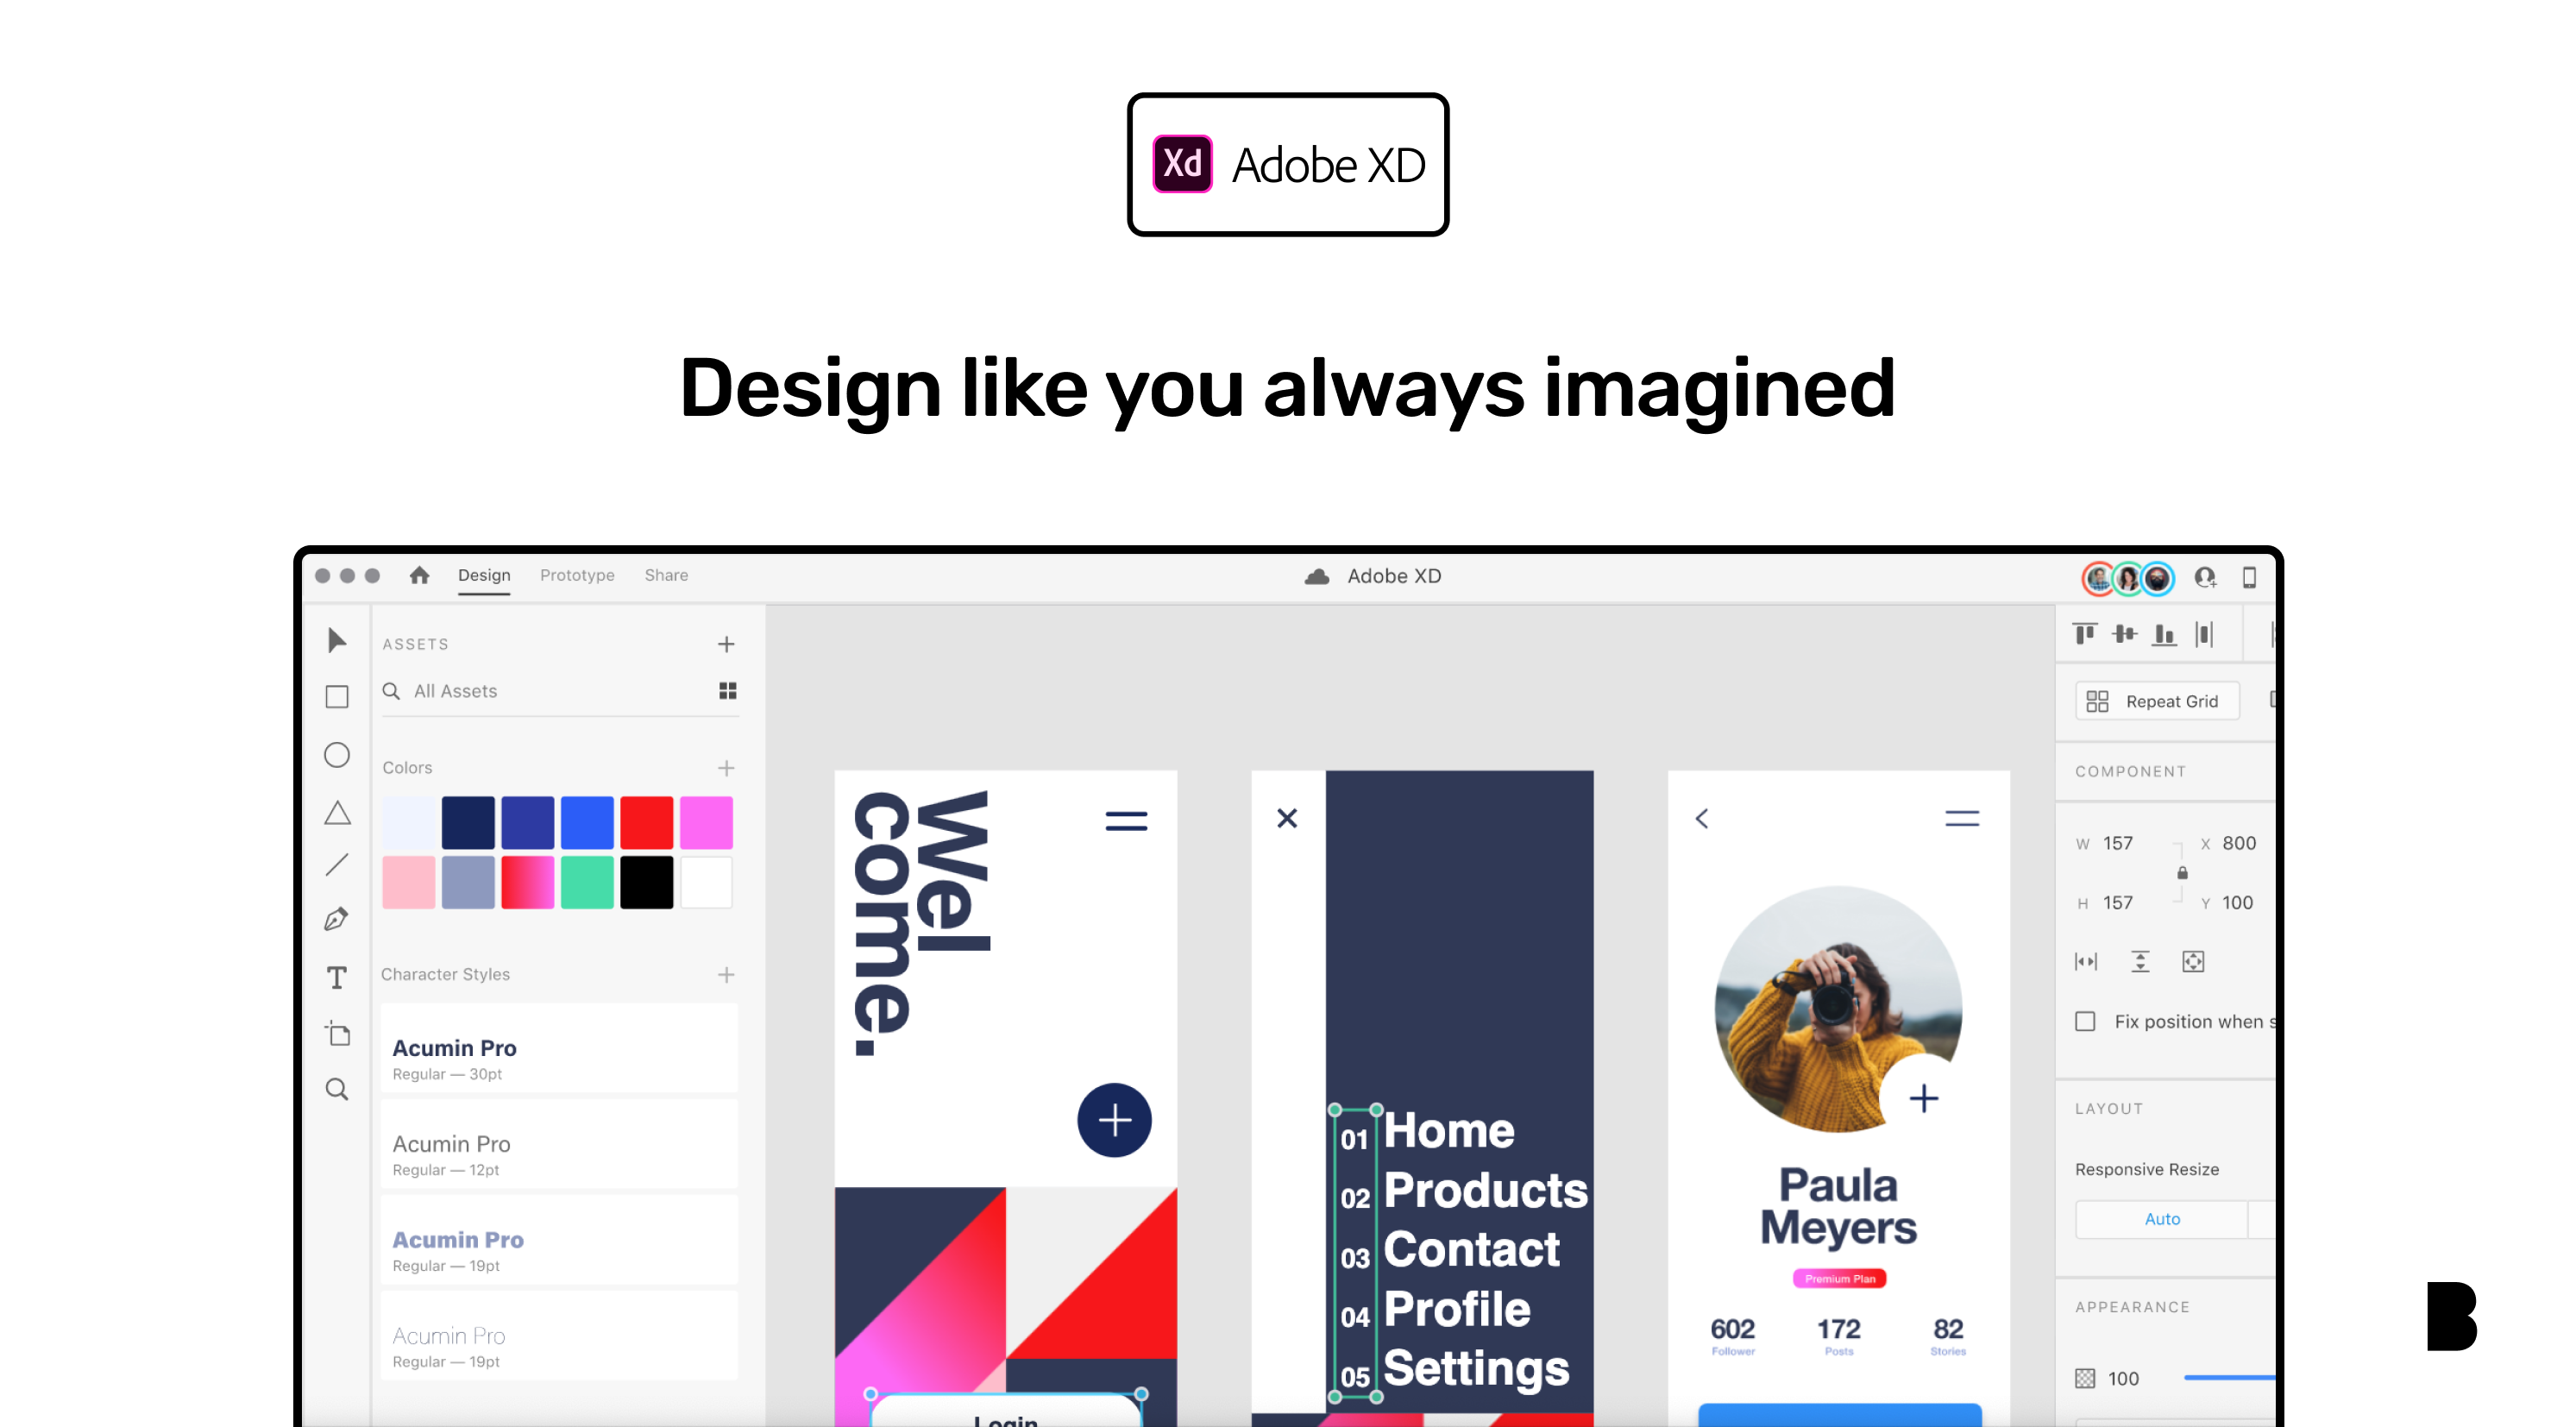 Adobe XD design board with illustration